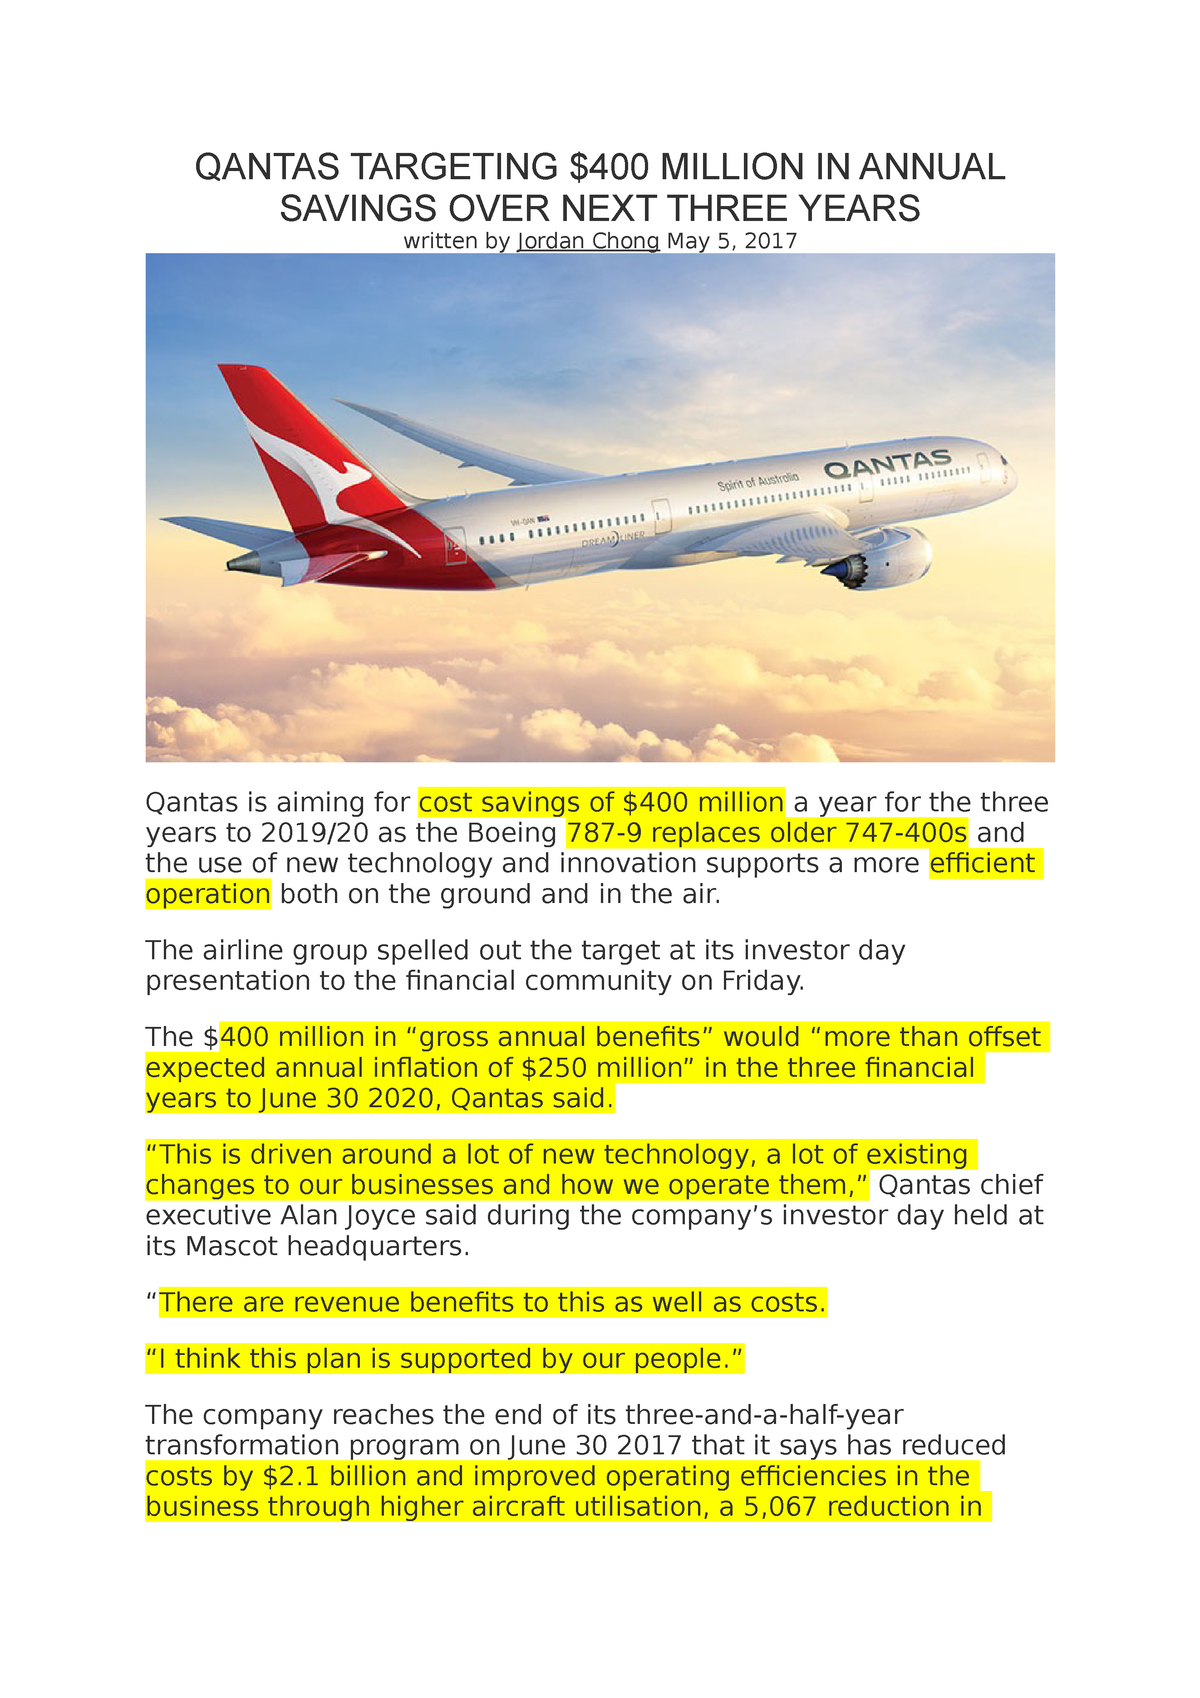 qantas case study 2022